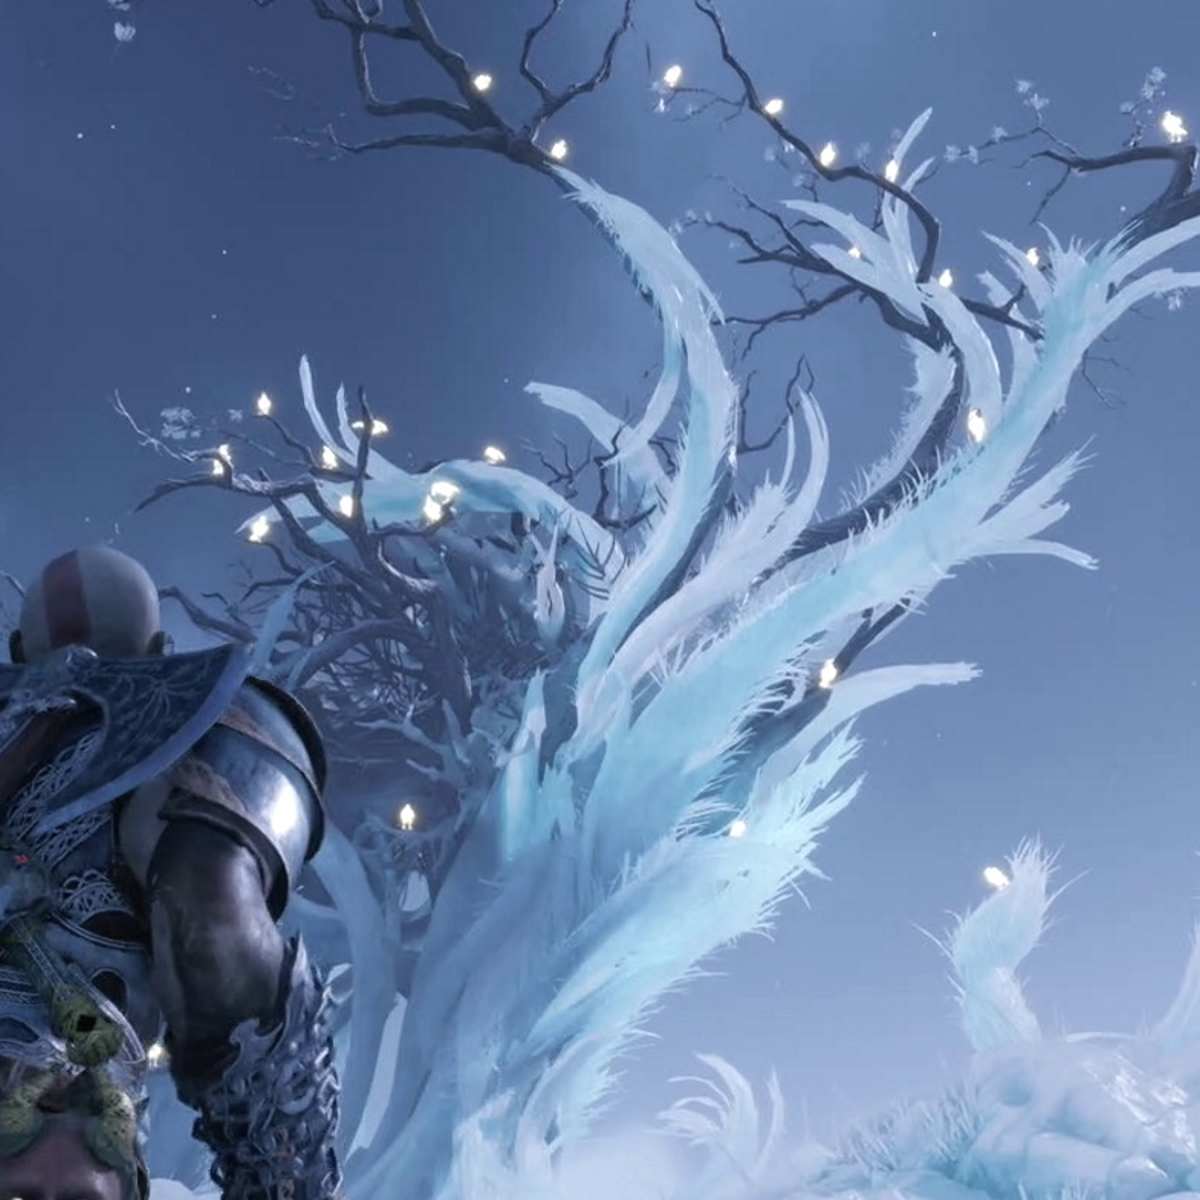 God of War Ragnarök Odin's Ravens locations and rewards for 'Eyes of Odin